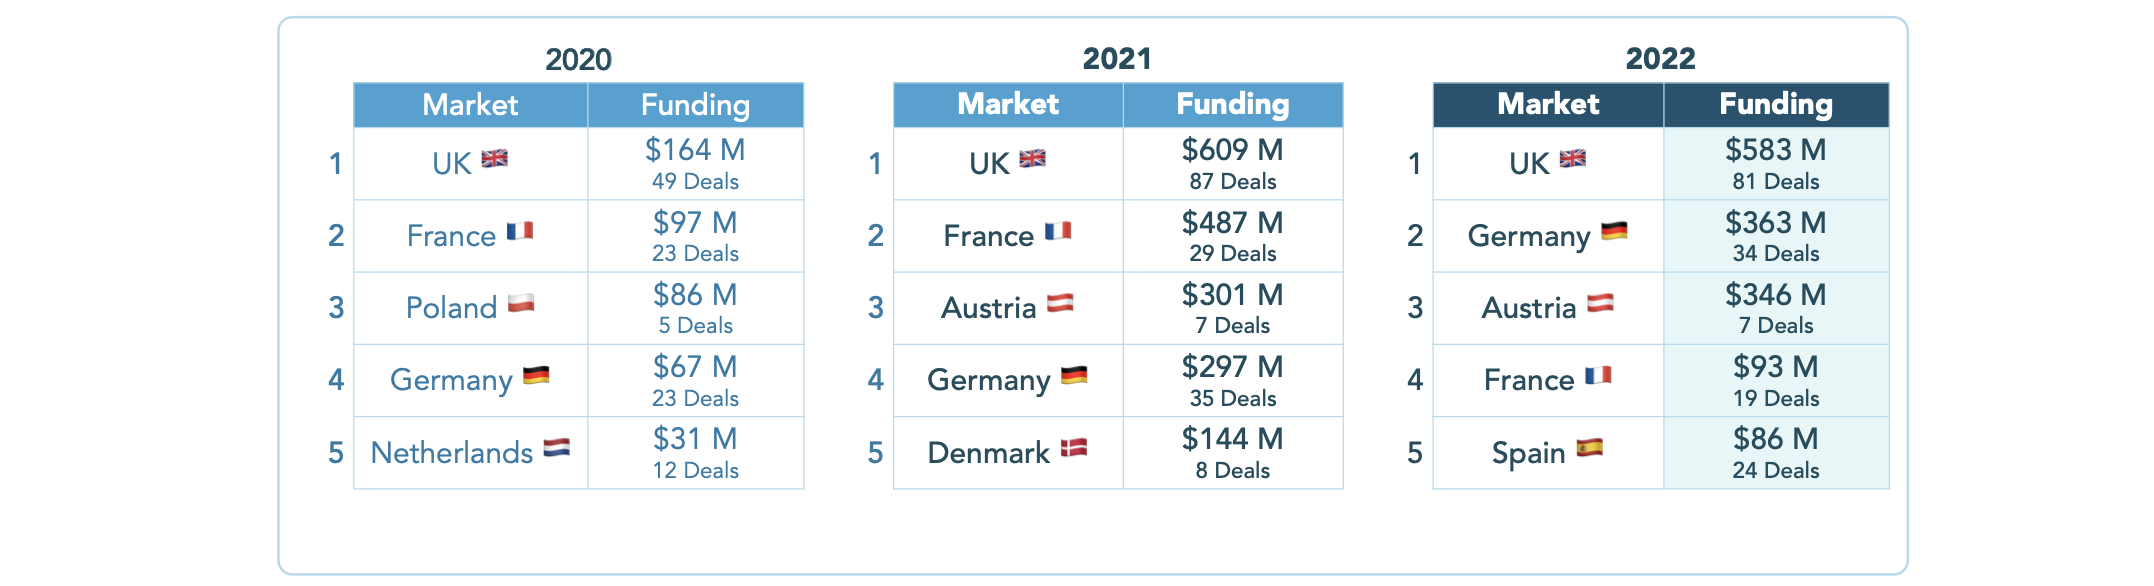 EdTech funding in the European market.  Image credits: Brighteye Ventures